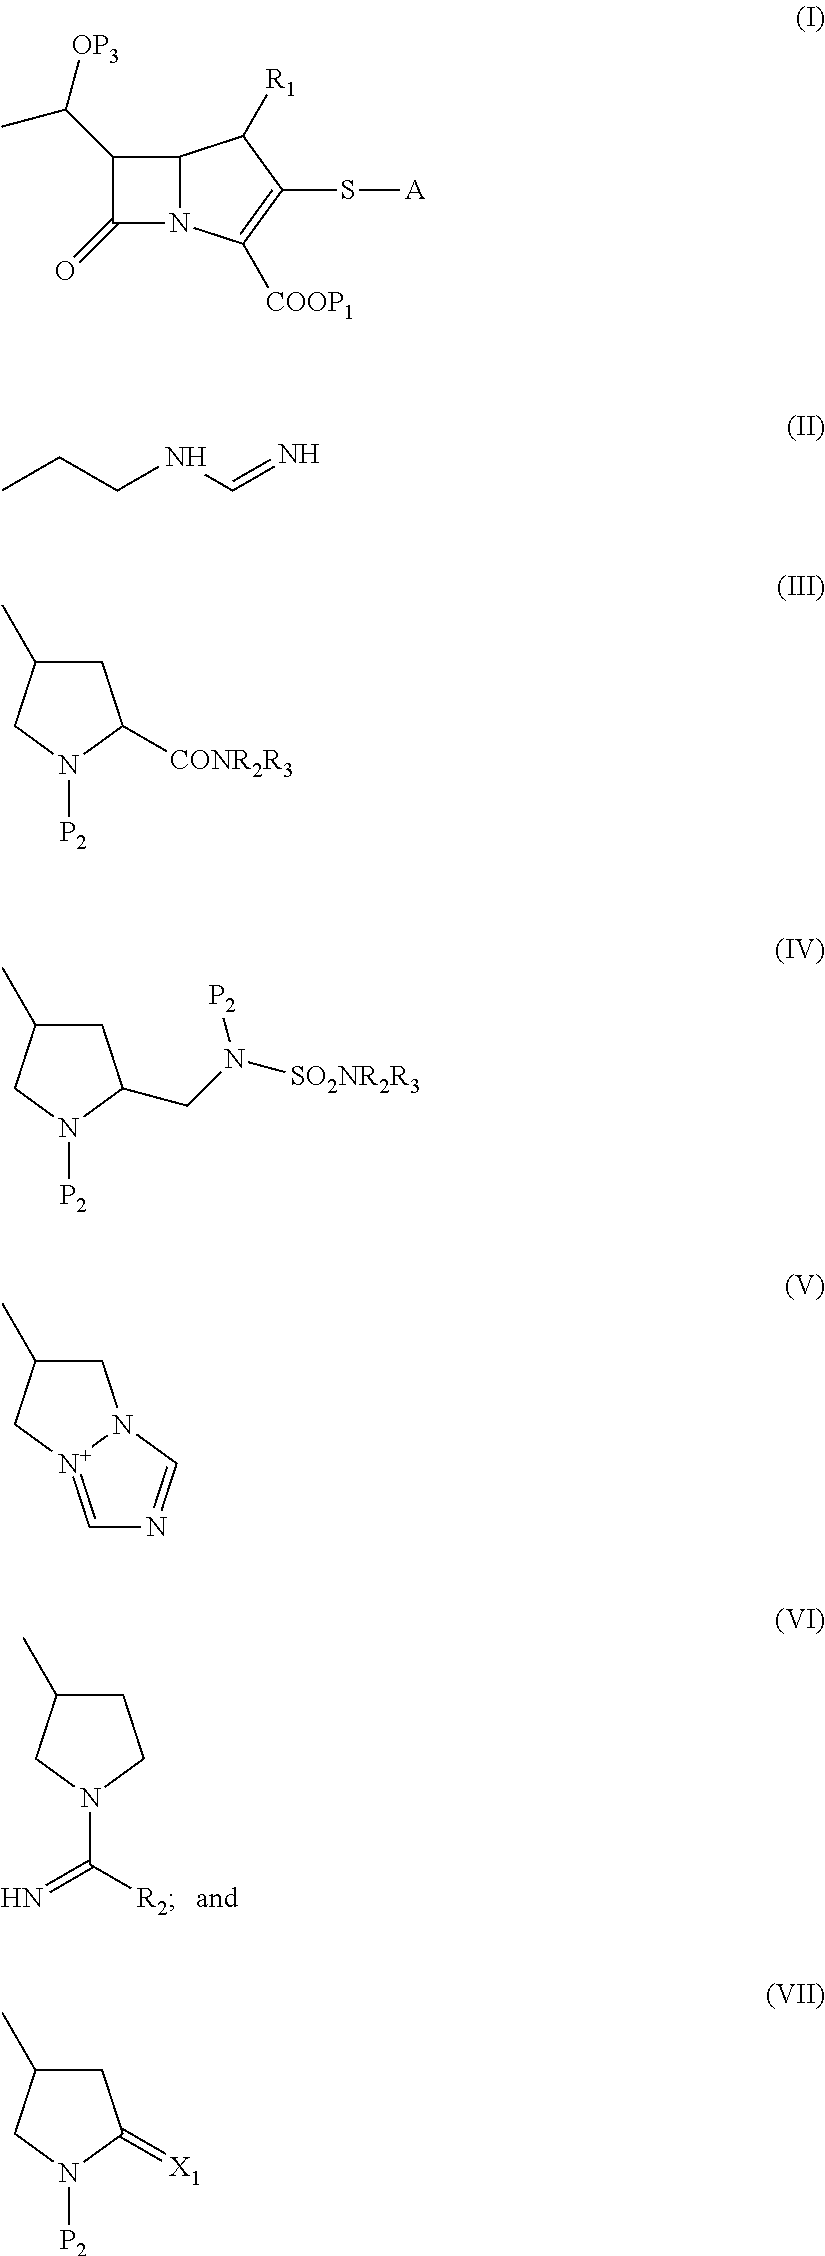 Process for the preparation of carbapenem compounds